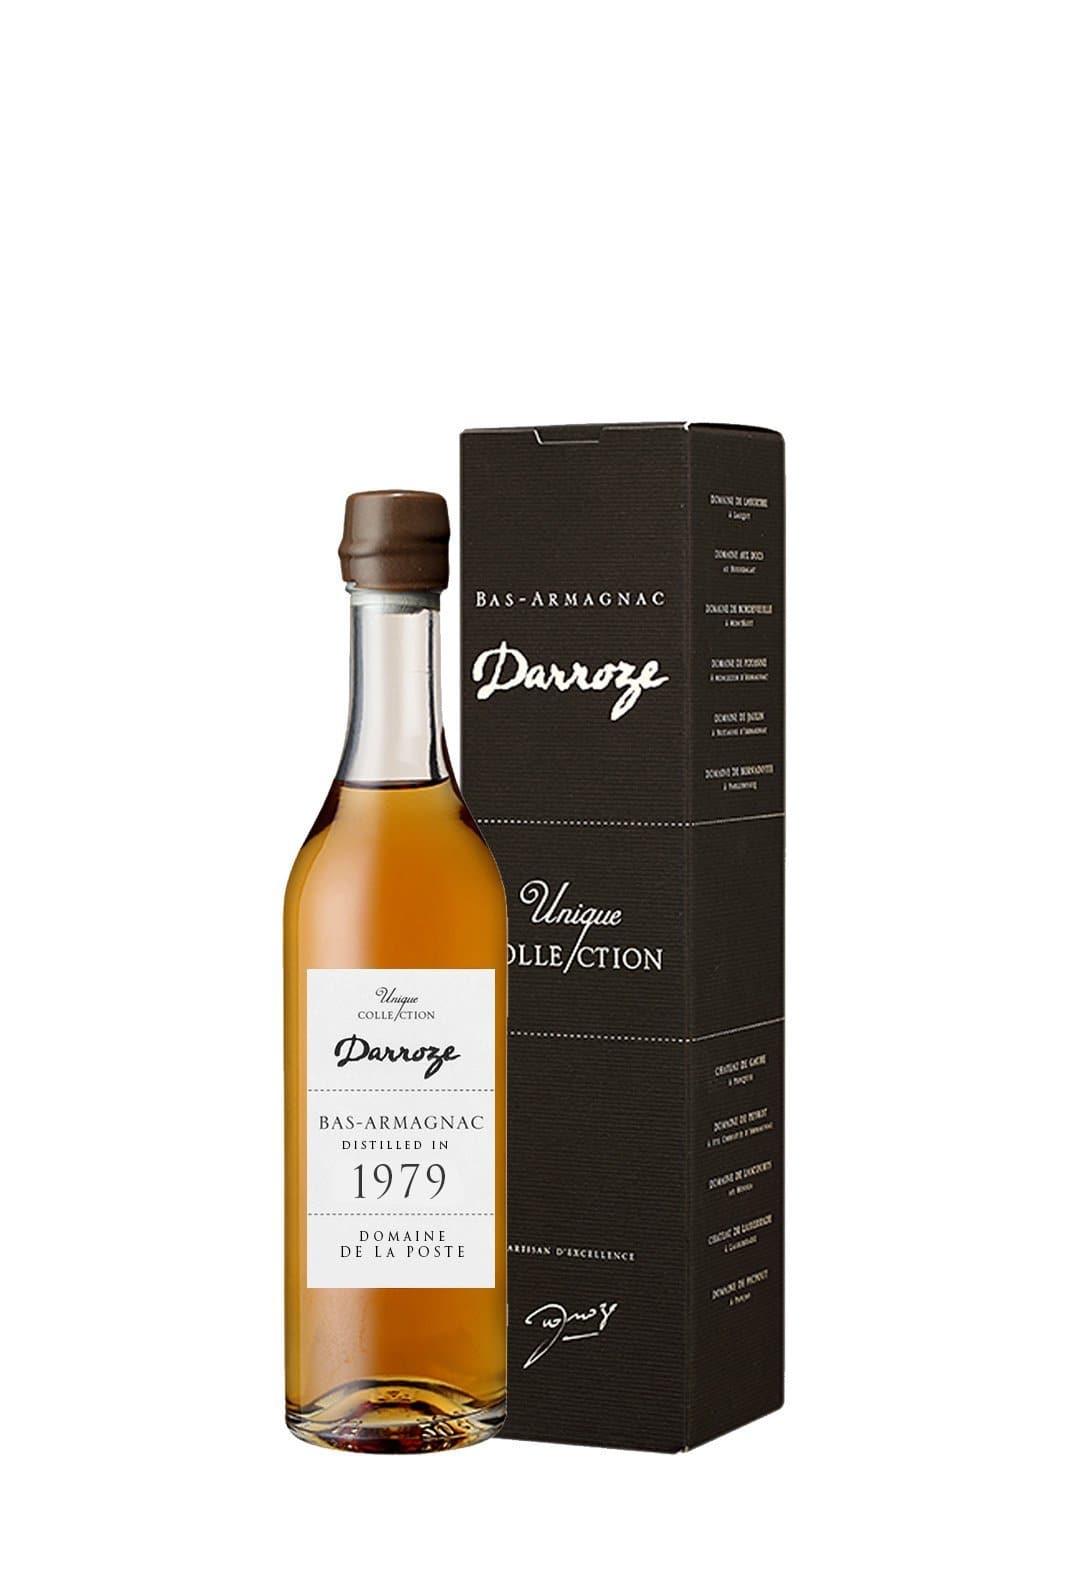 Darroze 1979 La Poste Armagnac 48% 200ml | Brandy | Shop online at Spirits of France